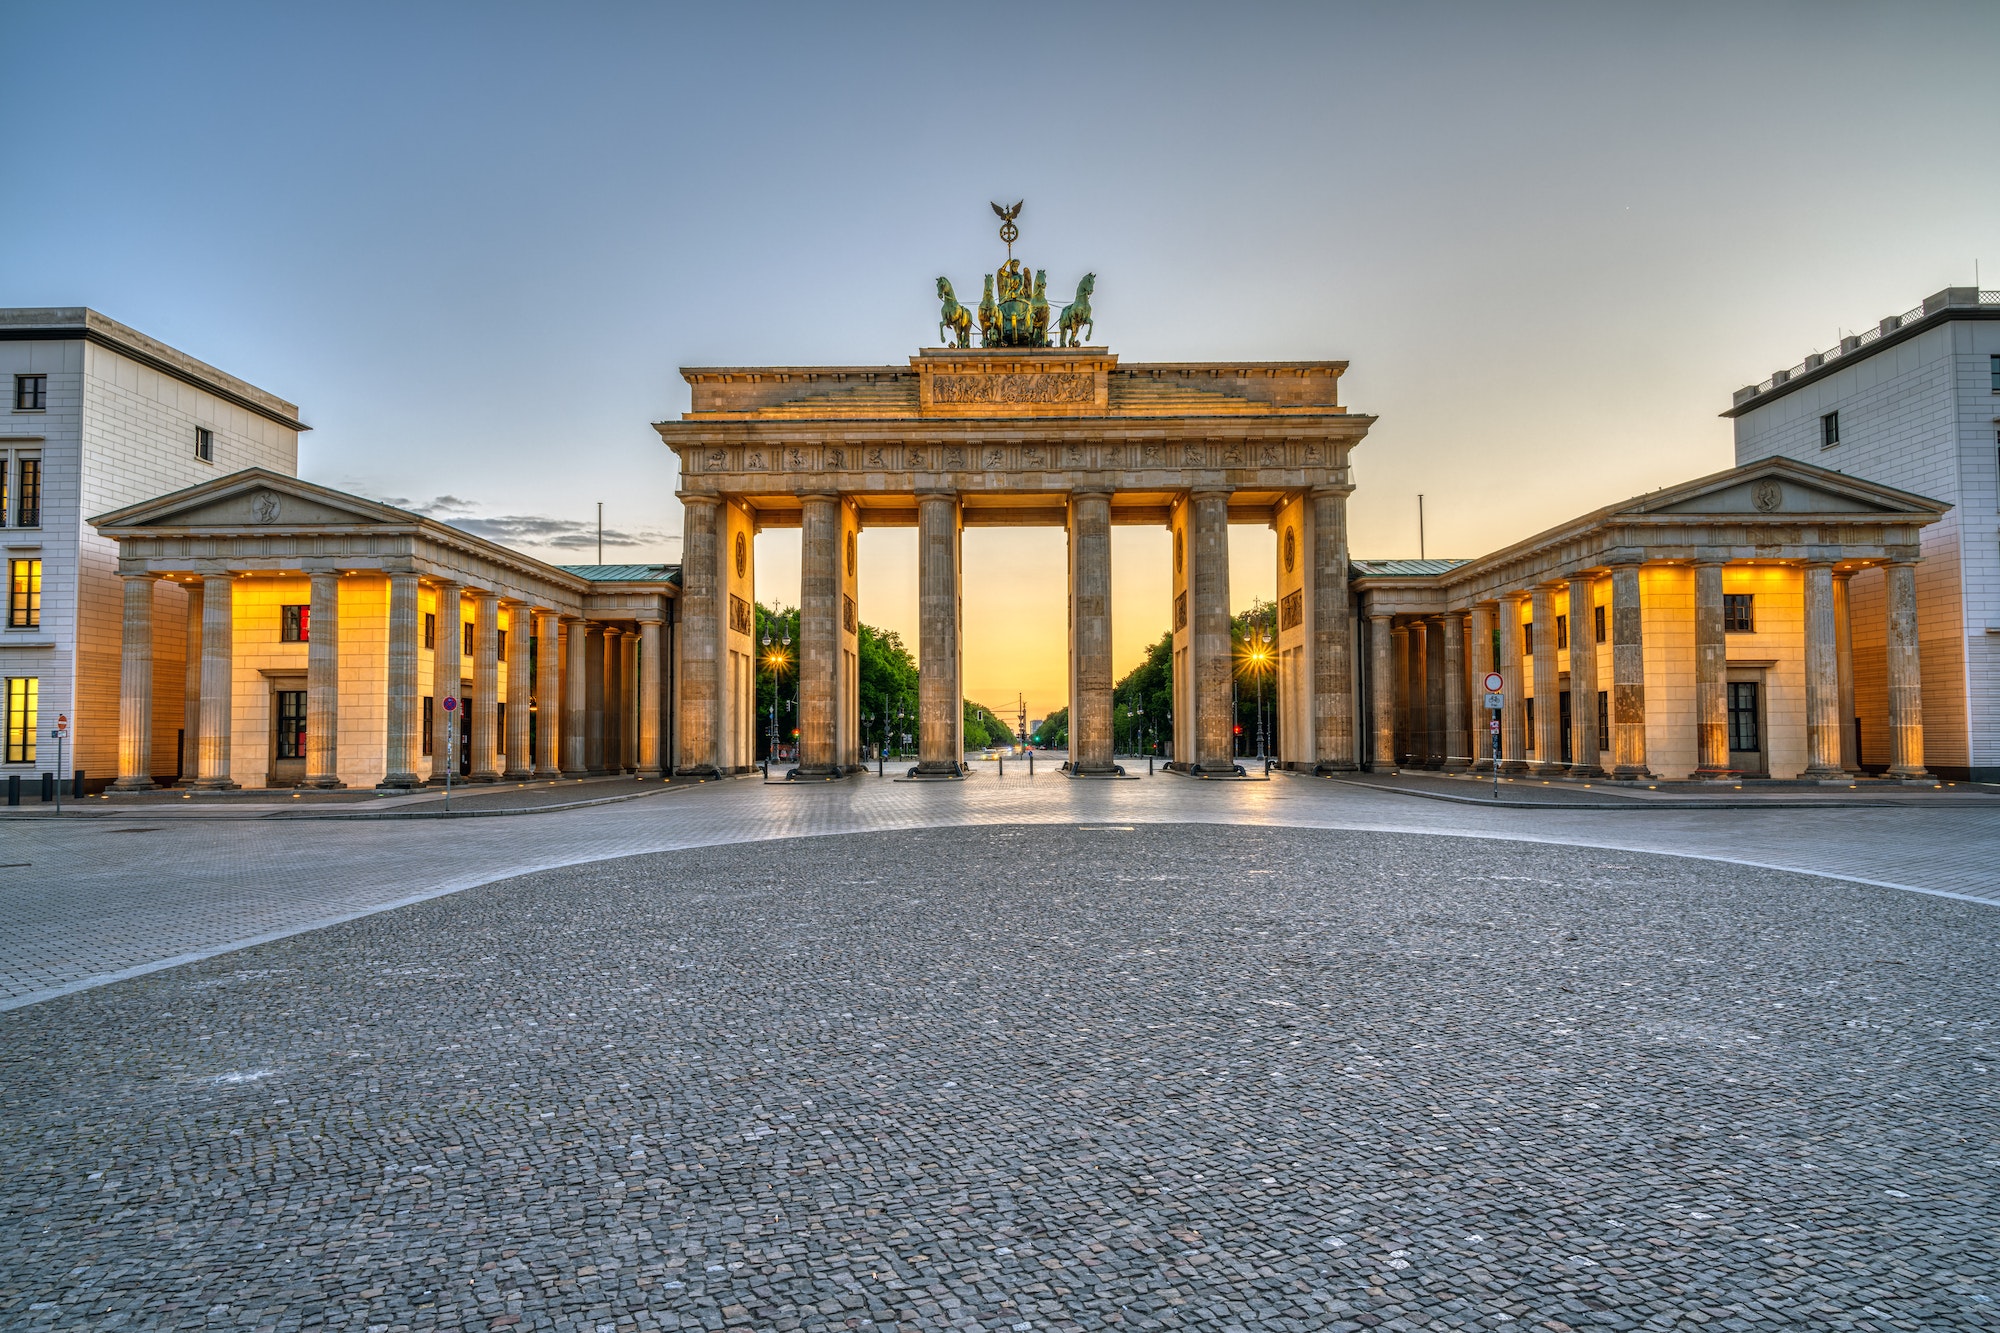 The iconic Brandenburg Gate in Berlin